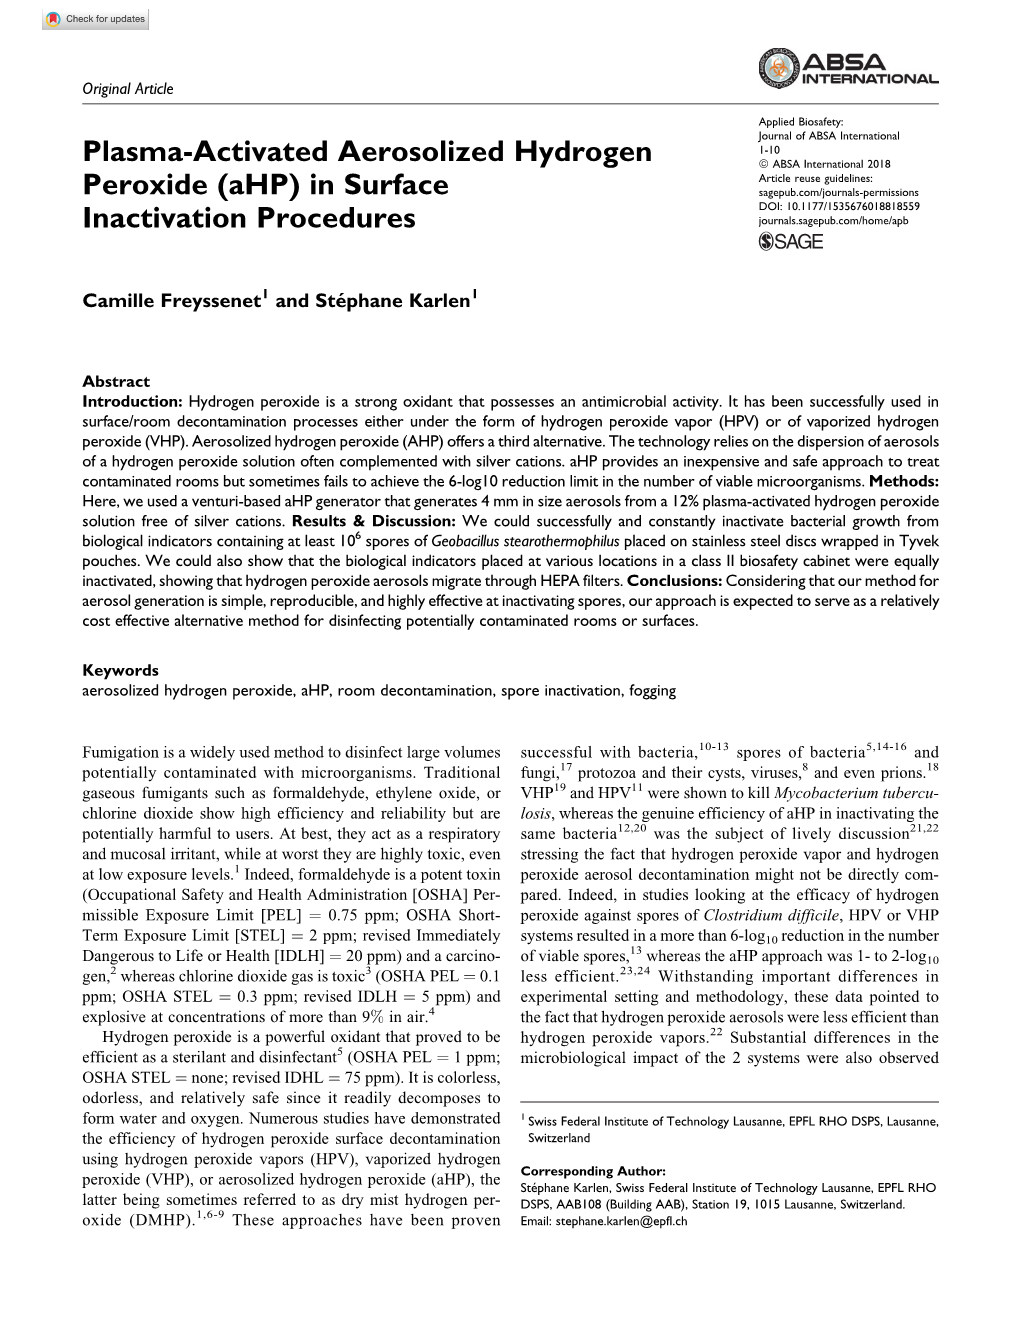 Plasma-Activated Aerosolized Hydrogen Peroxide (Ahp)